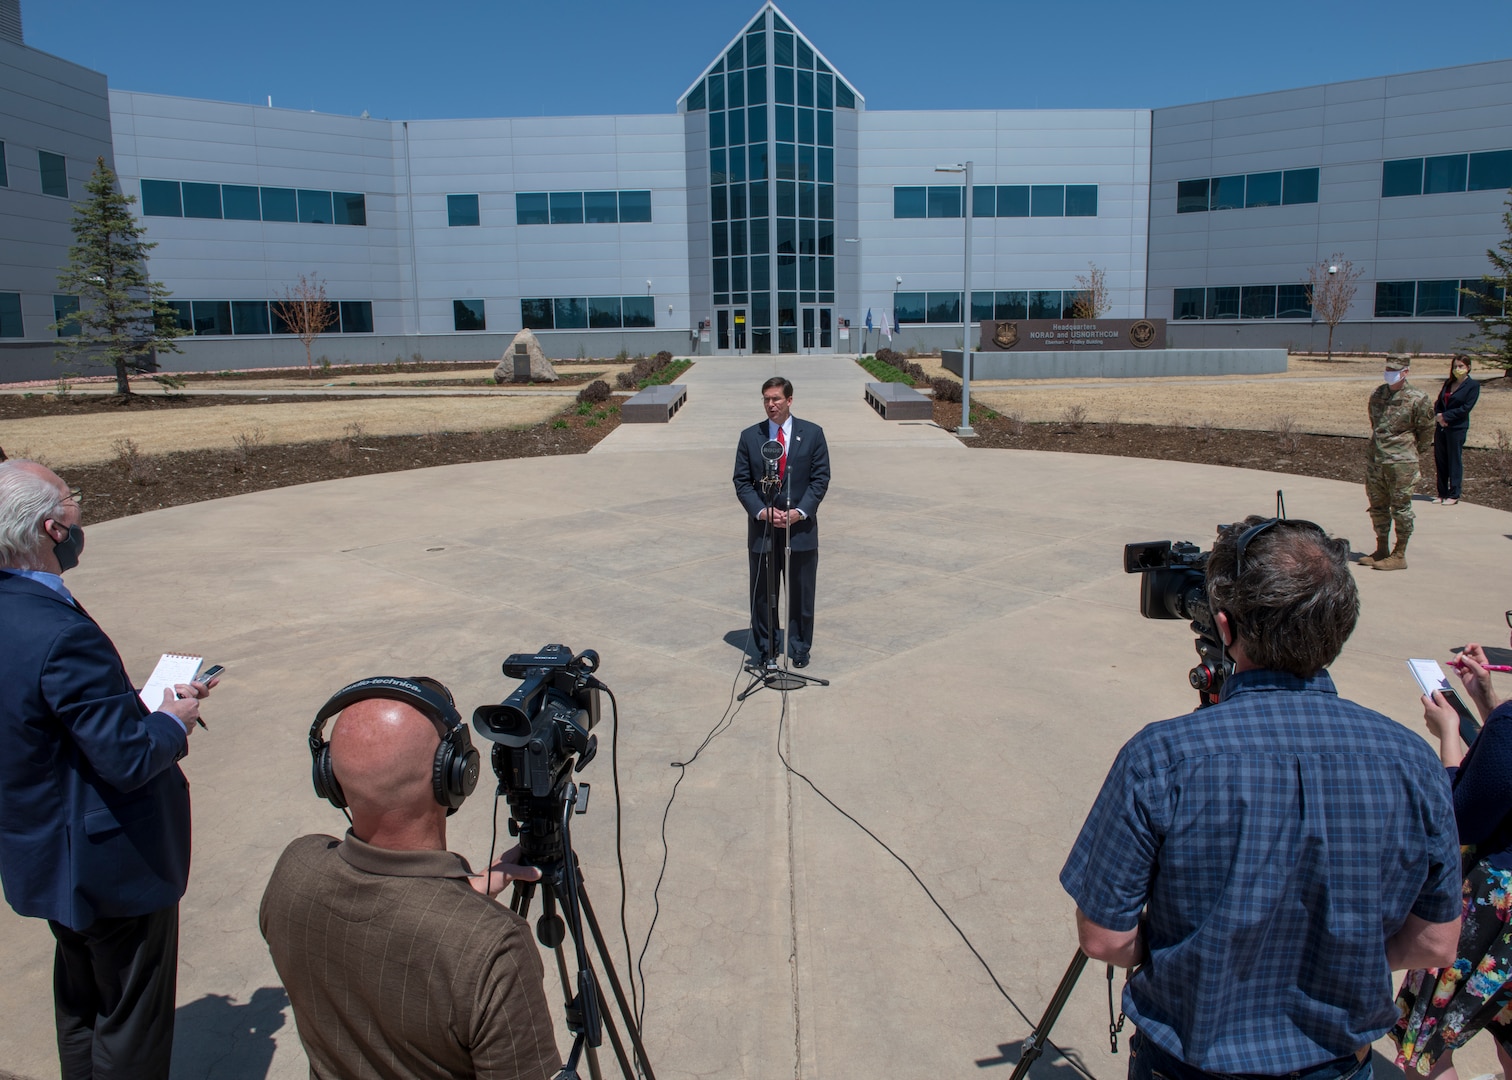 Secretary of Defense Mark Esper visit to NORAD and USNORTHCOM